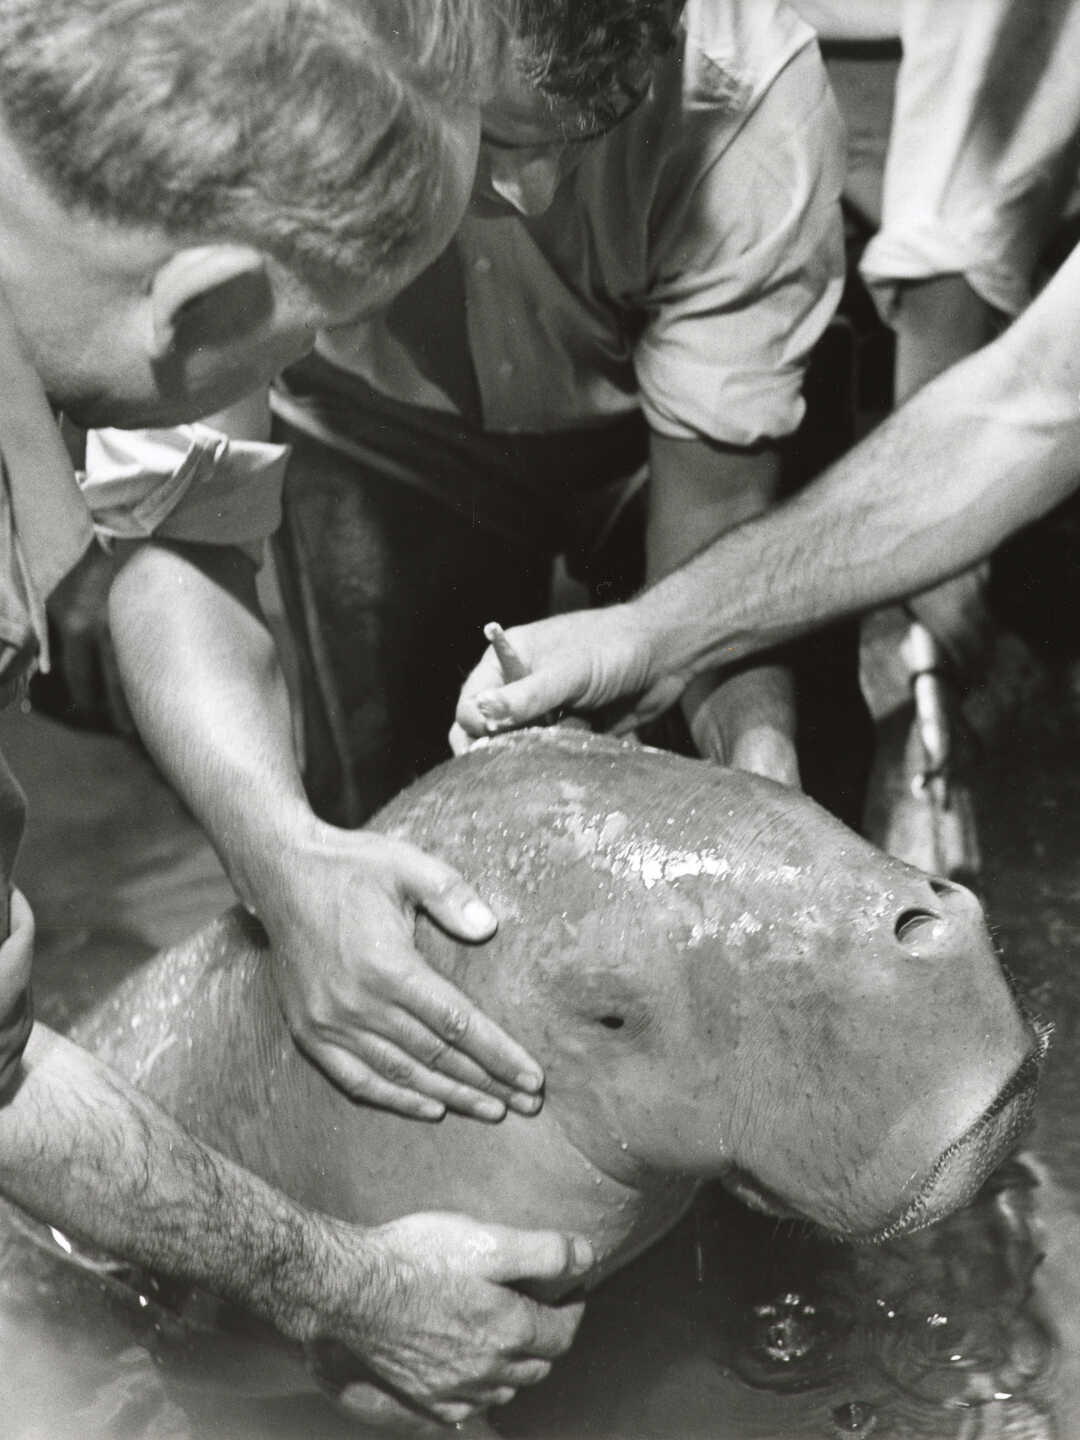 Eugenie the dugong arrives at Steinhart Aquarium in 1955